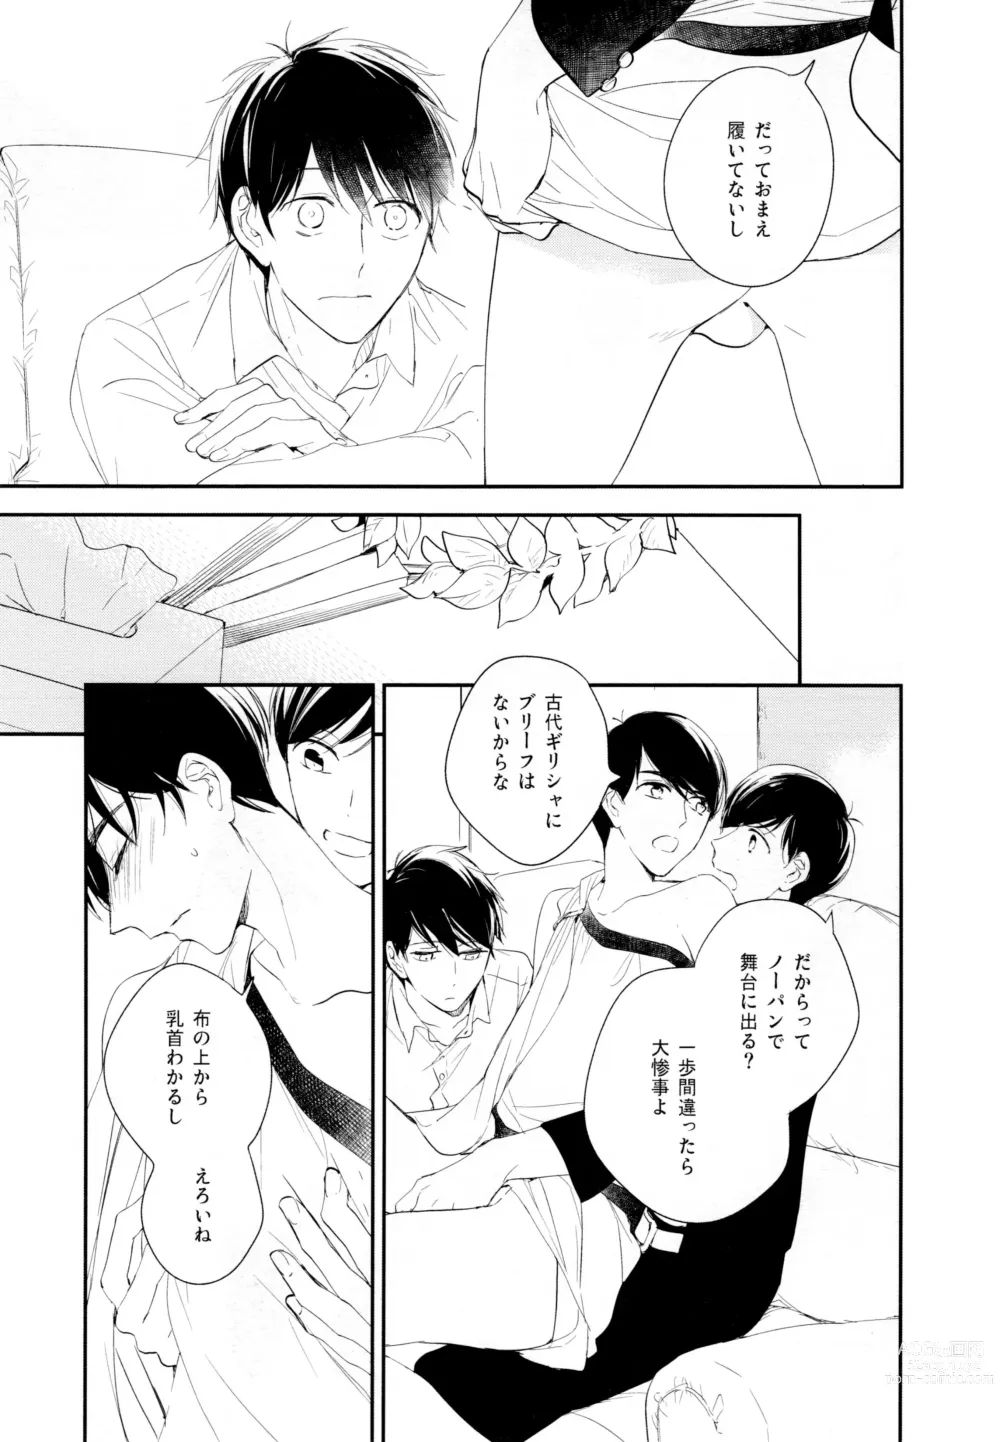 Page 76 of doujinshi Hikari ni Tsuite